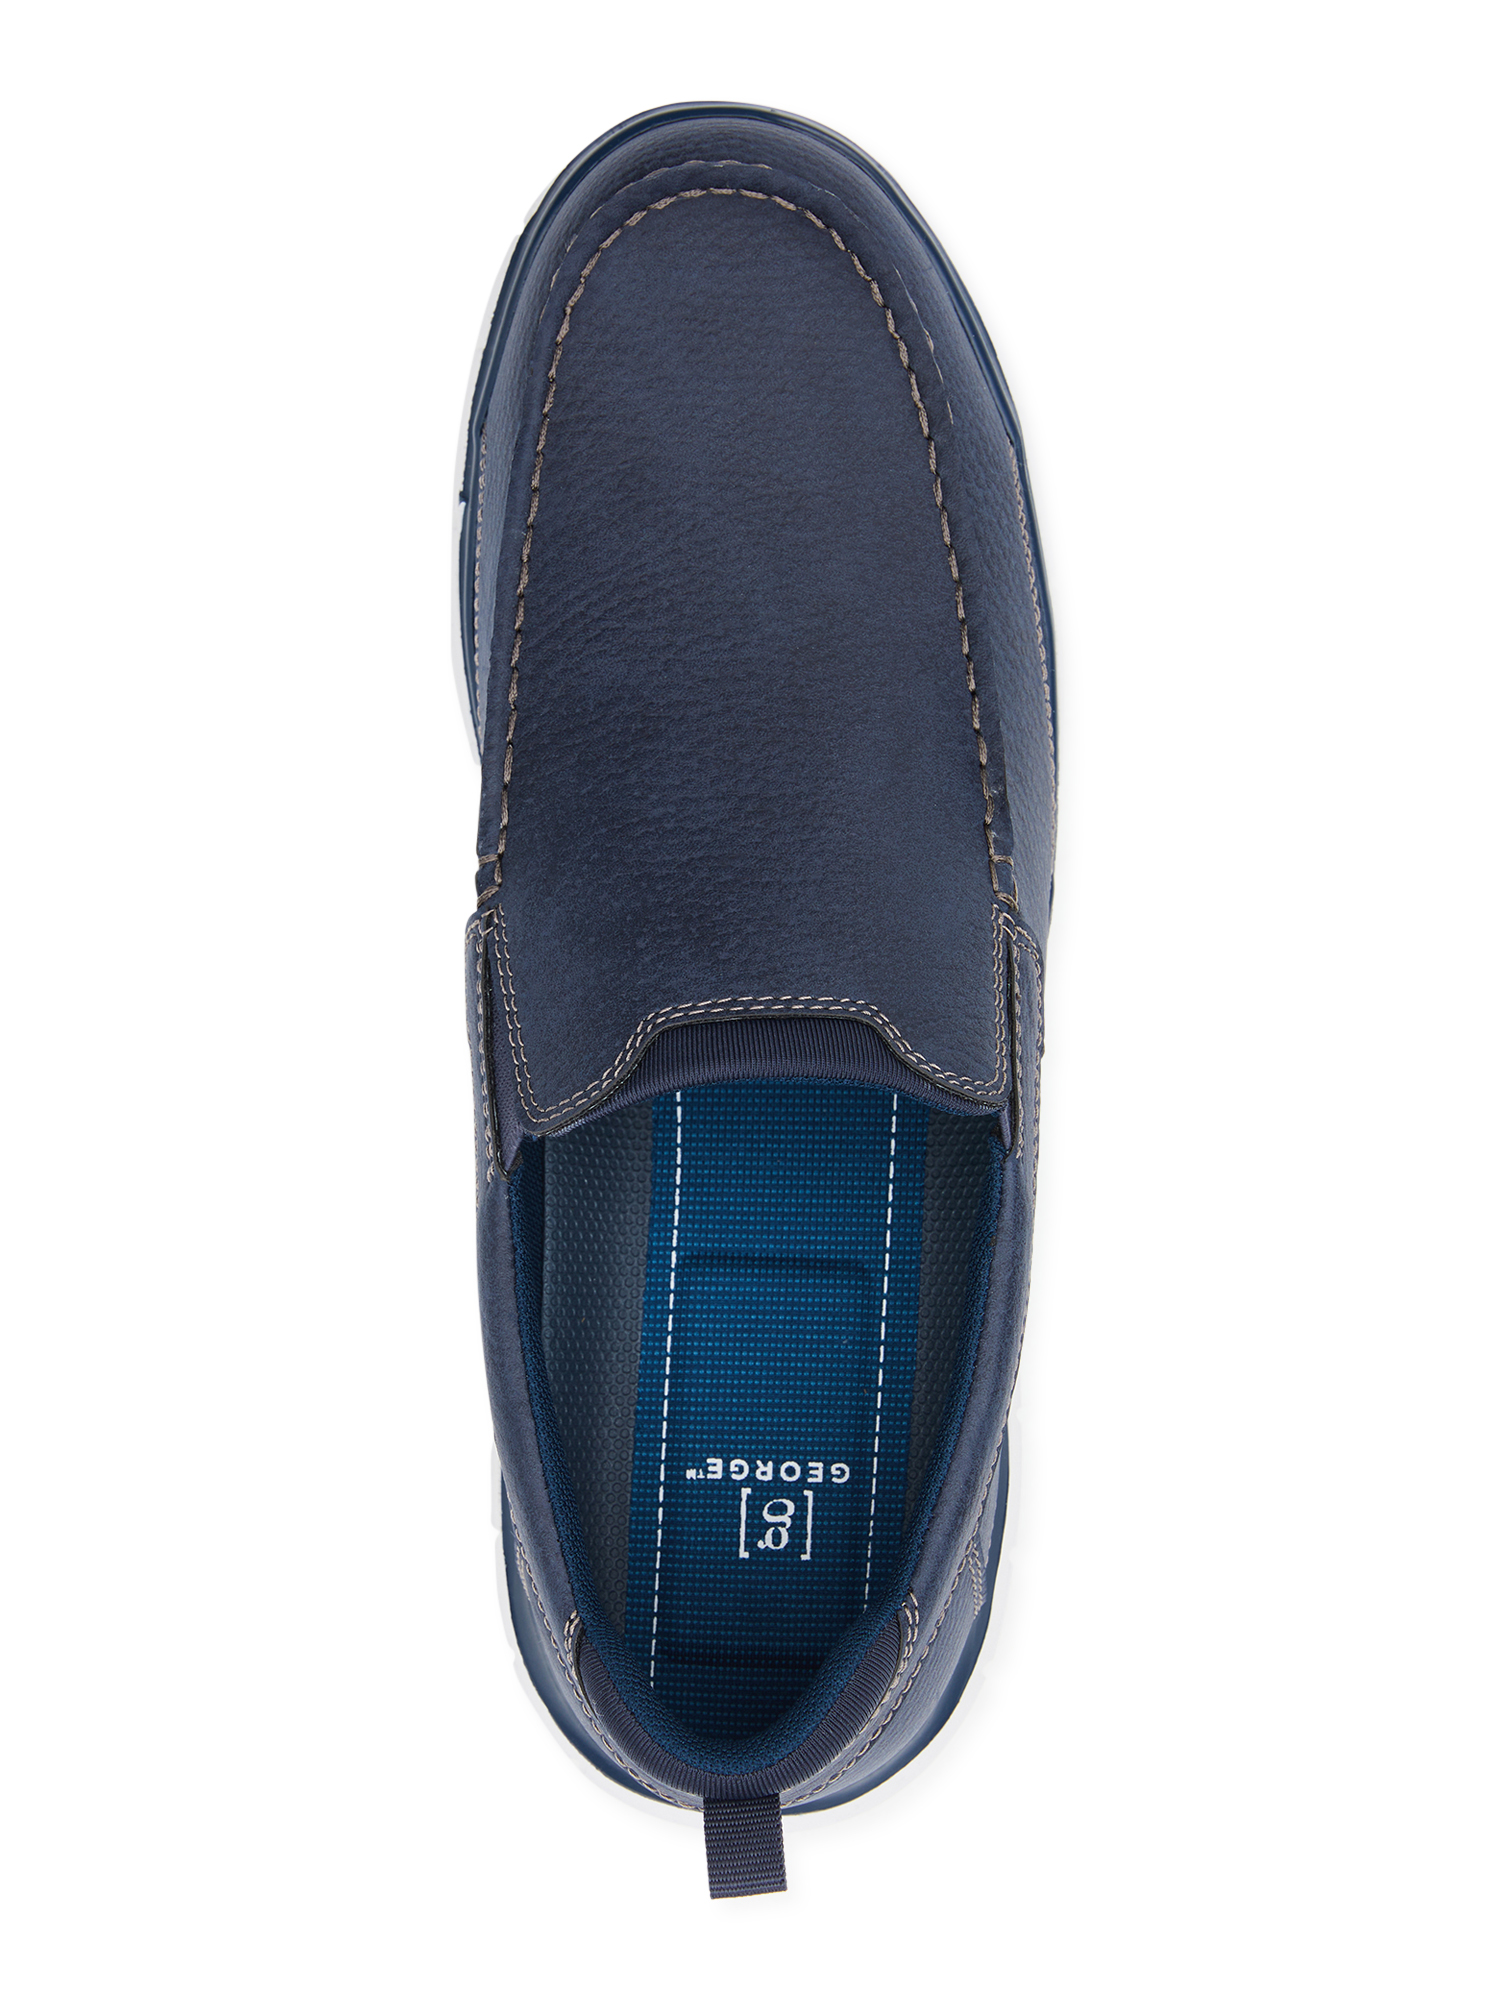 George Men's Casual Slip On Shoes - Walmart.com